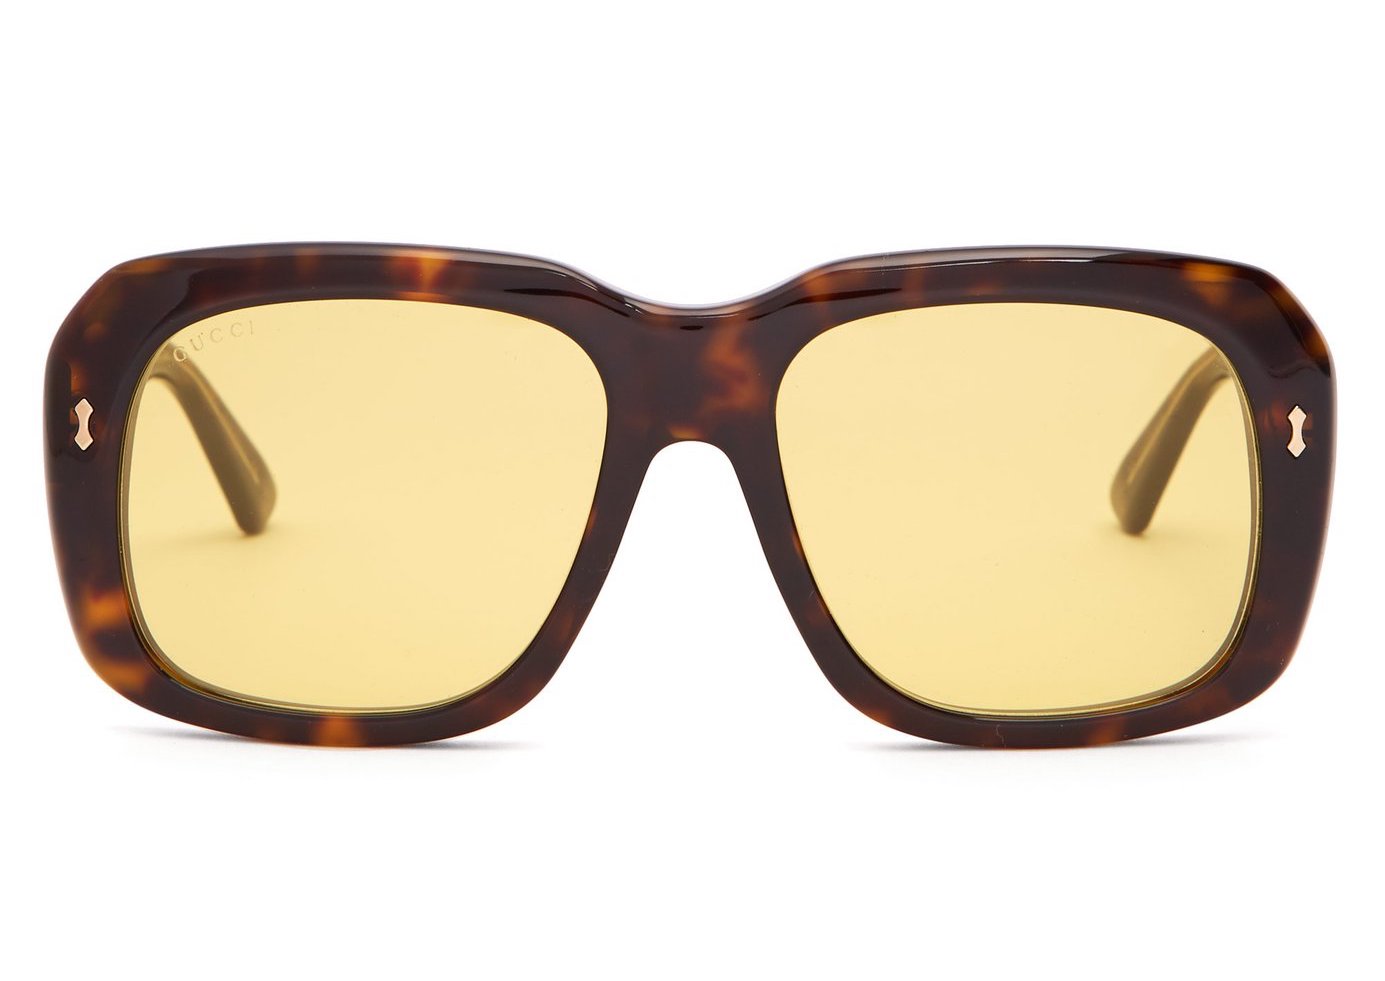 GUCCI Square-frame acetate sunglasses